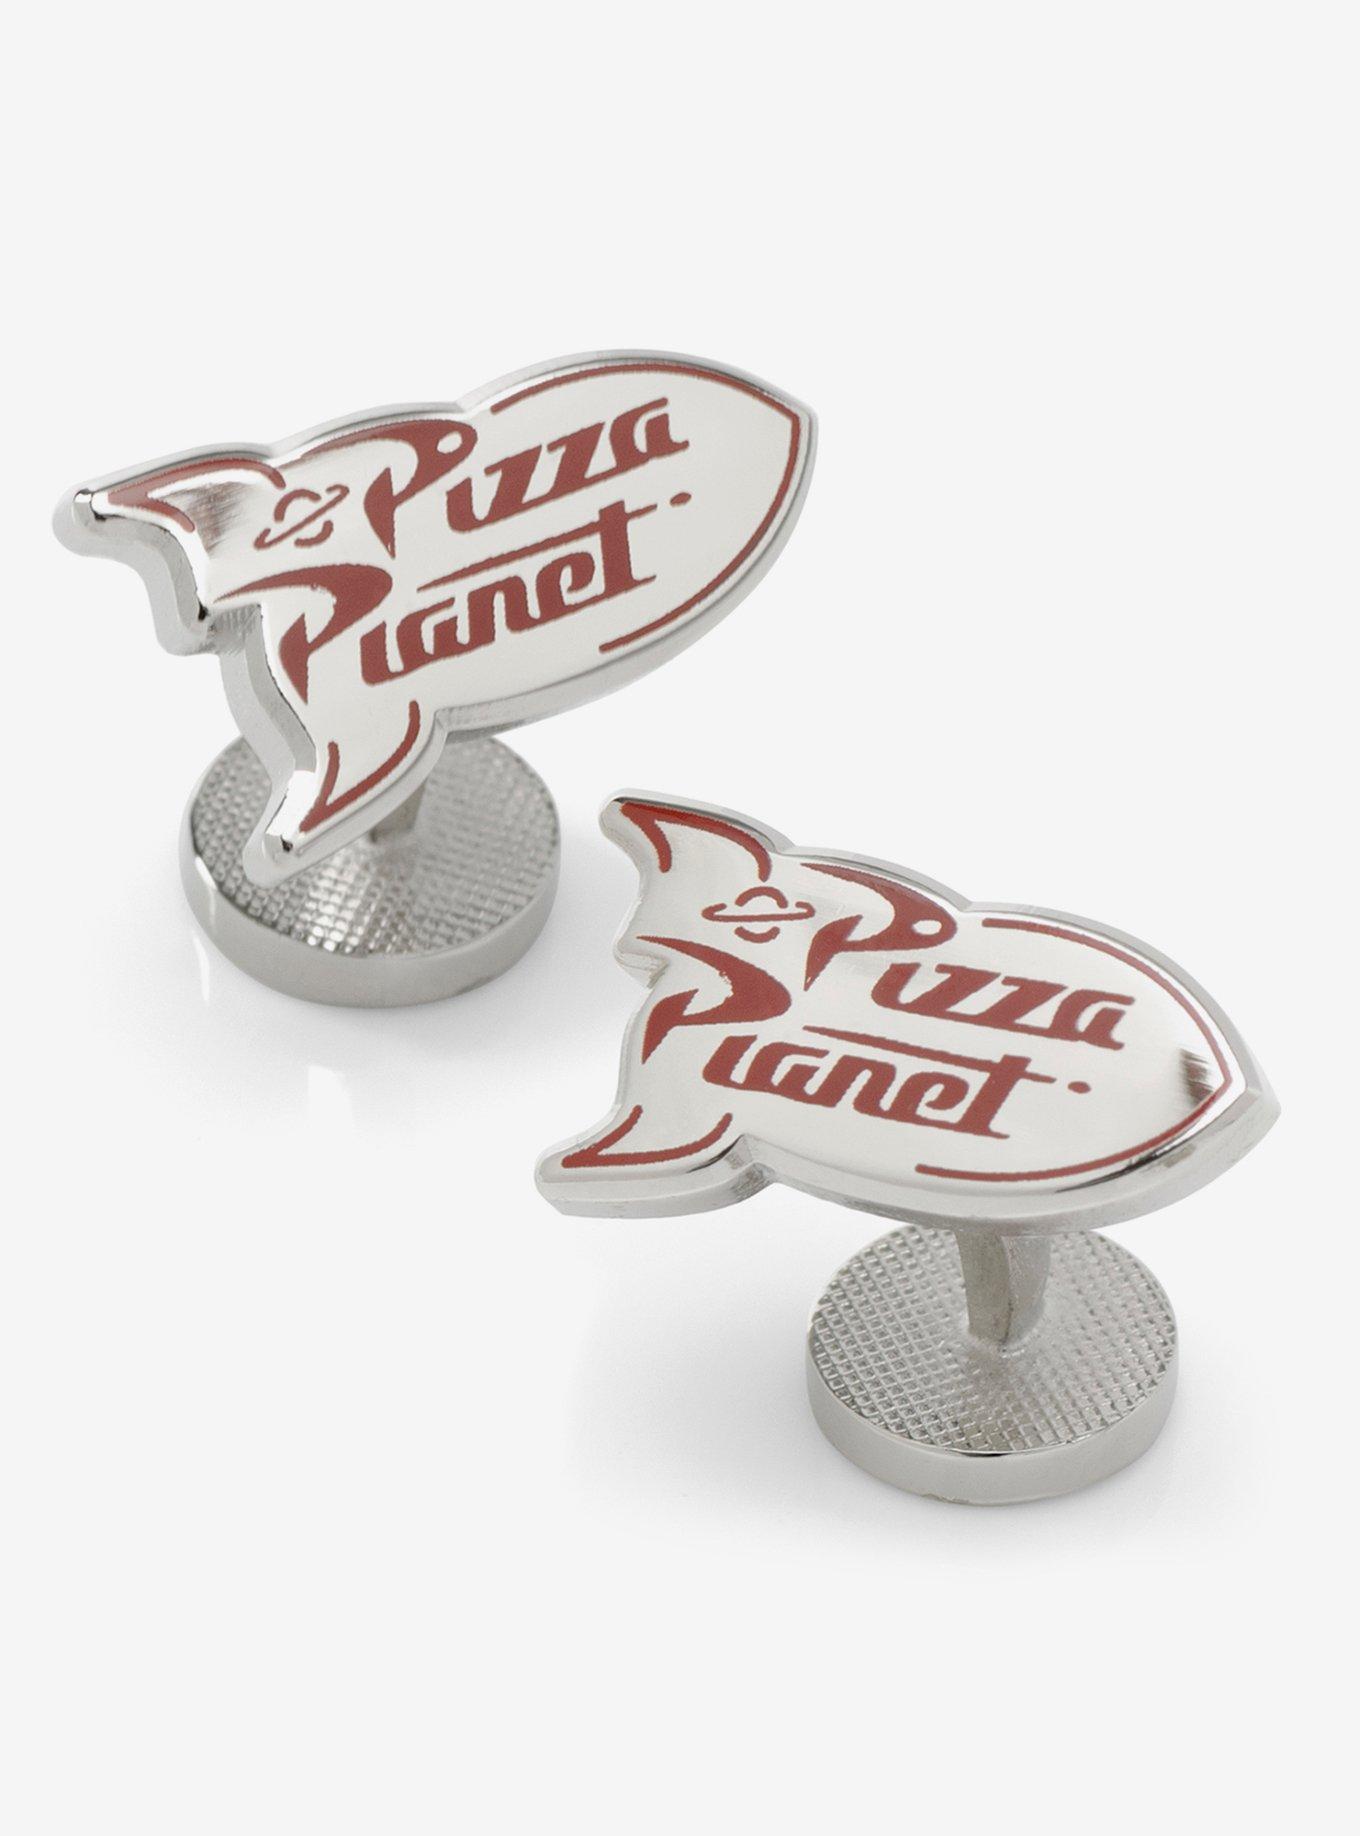 Disney Pixar Toy Story Pizza Planet Cufflinks